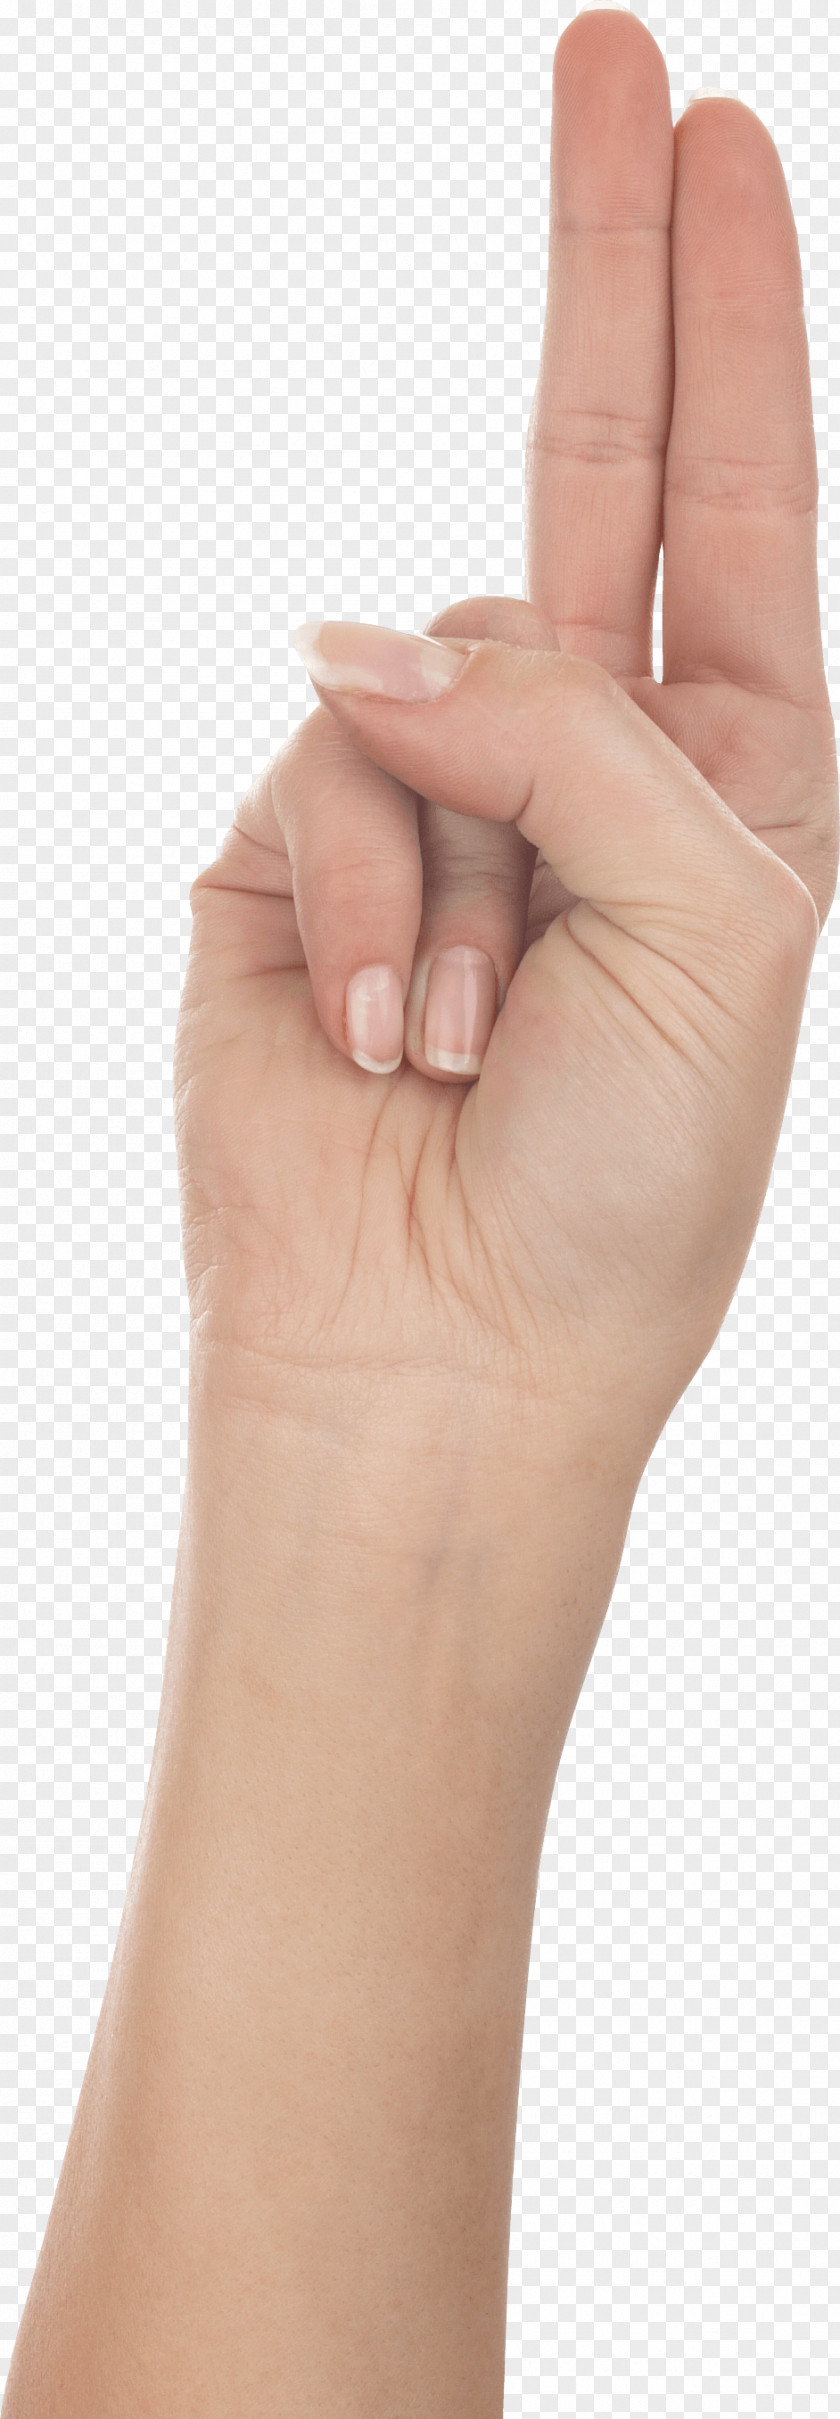 Hands Hand Image Nail Polish Salon Manicure Disease PNG